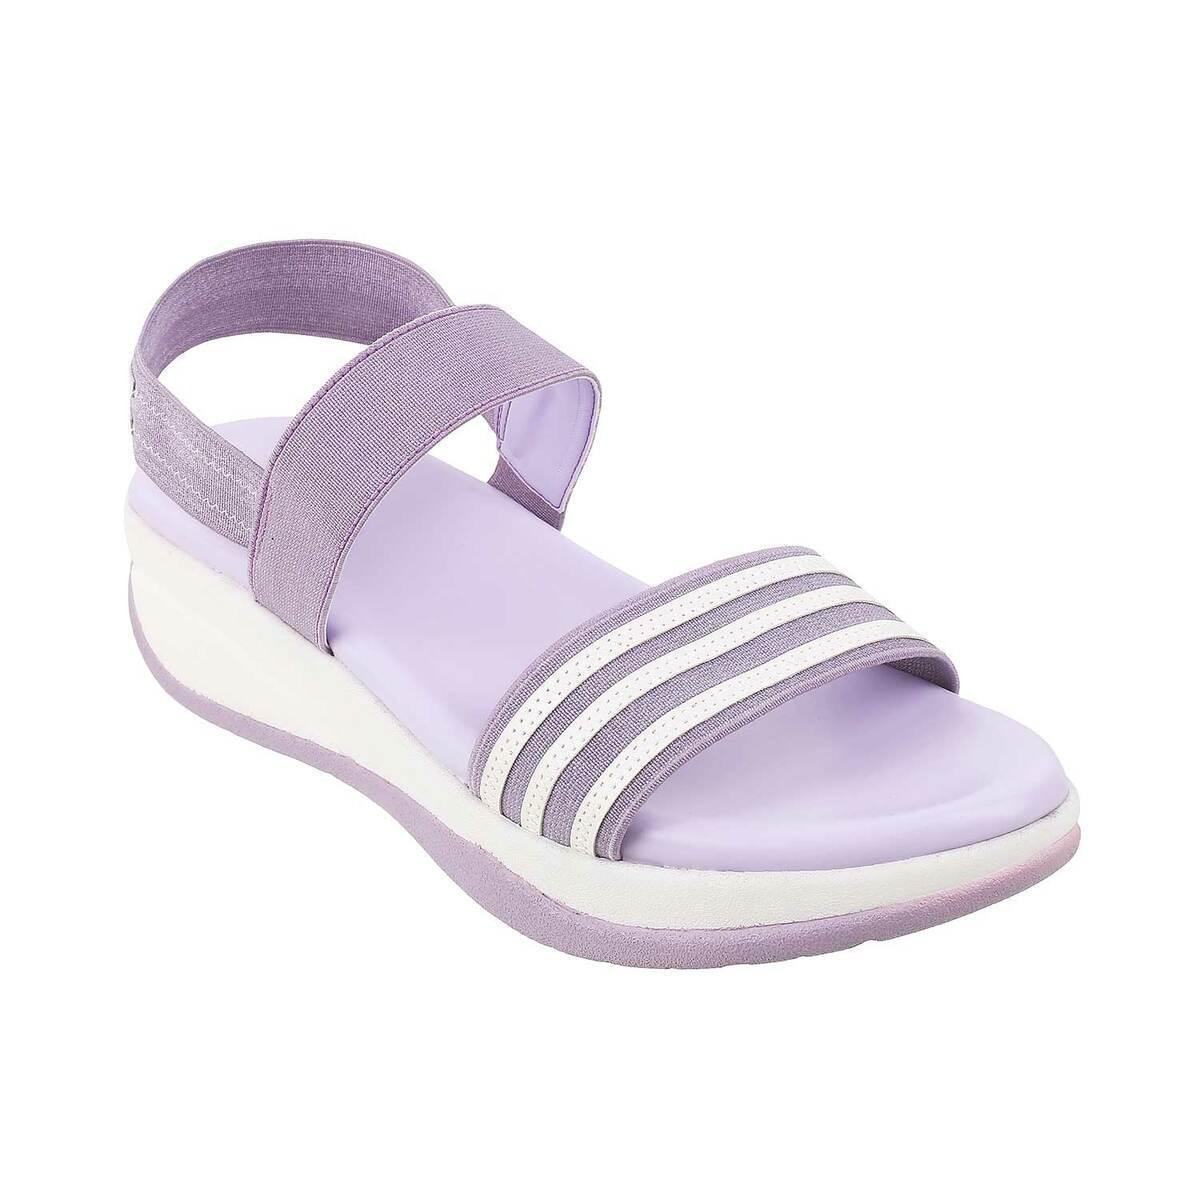 Girl Swimming Pool Sandals Slap 100 Basic Purple Pink